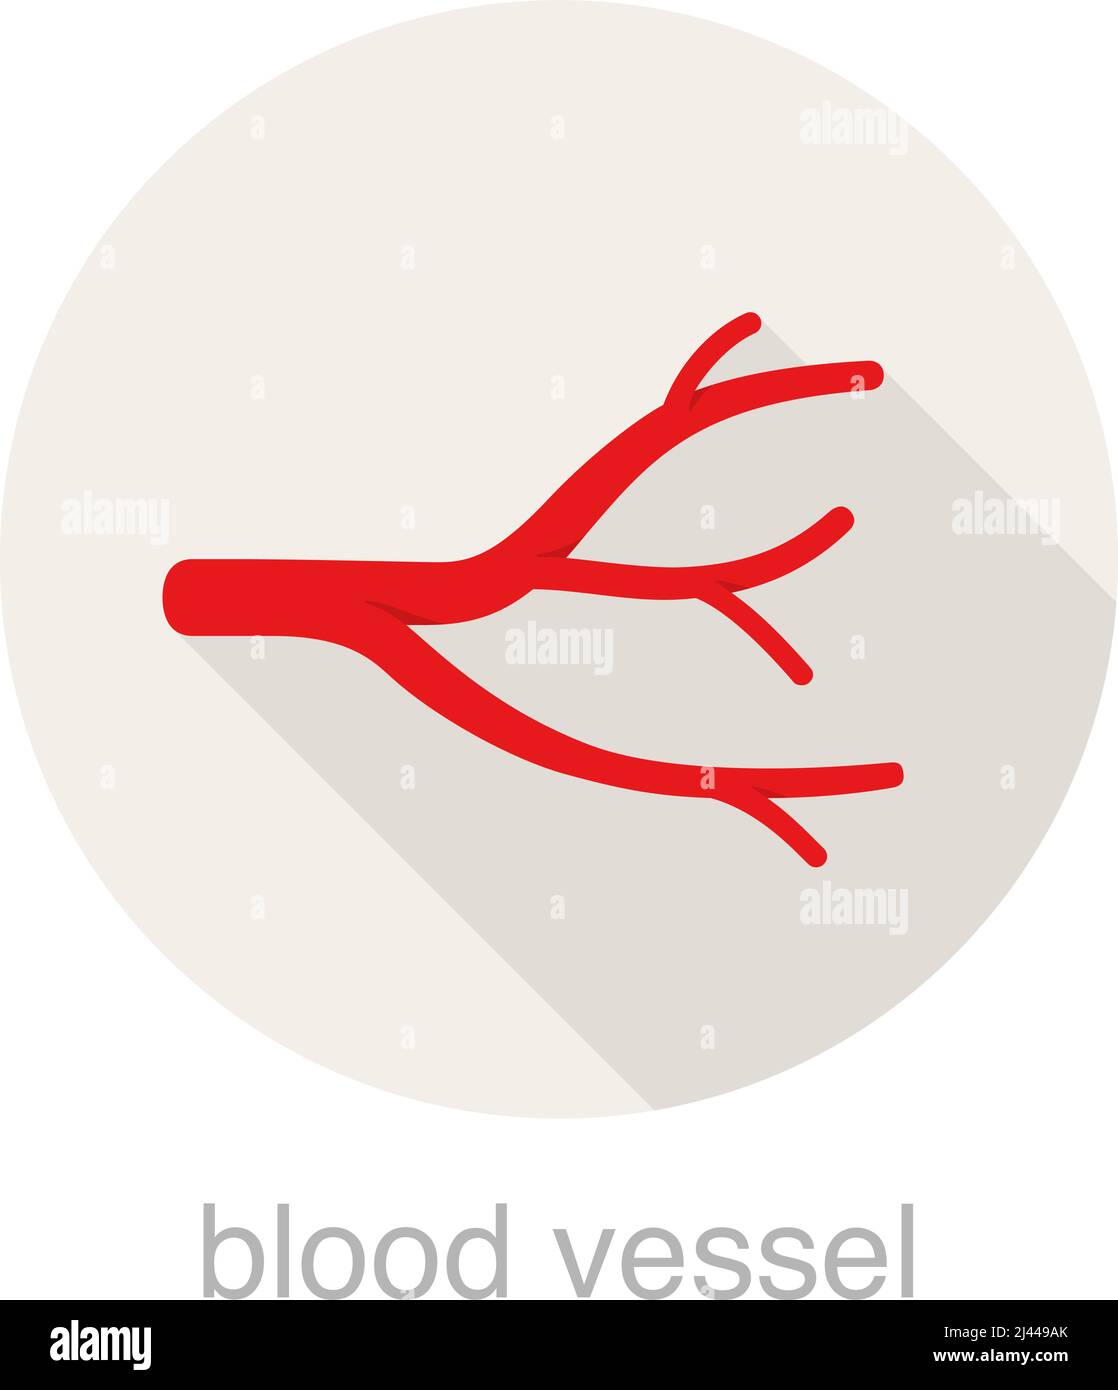 Human blood vessel flat design icon, vector illustration Stock Vector